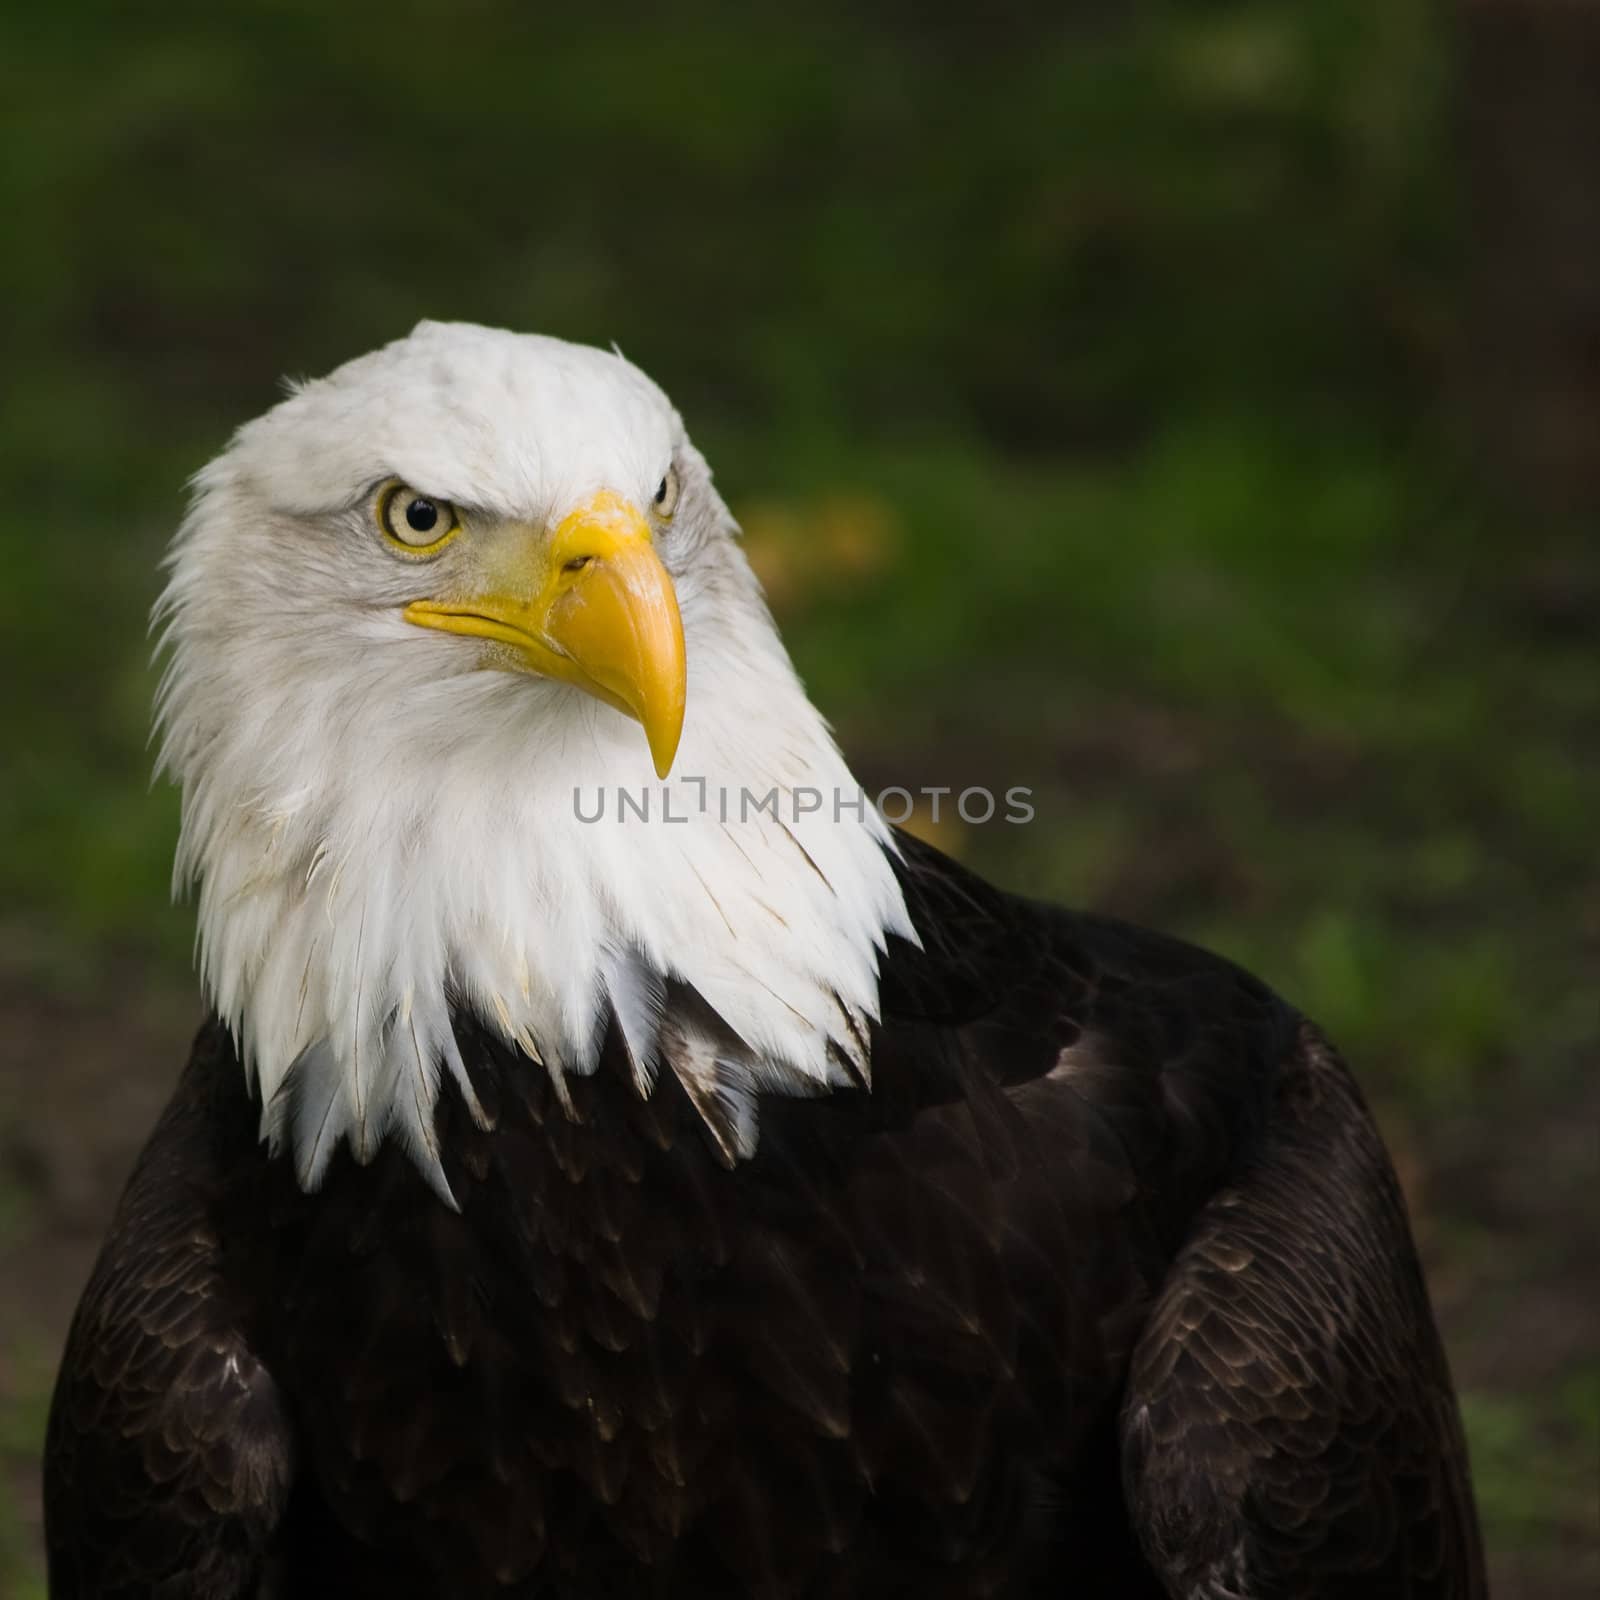 Bald eagle portrait, square cropped image by Colette